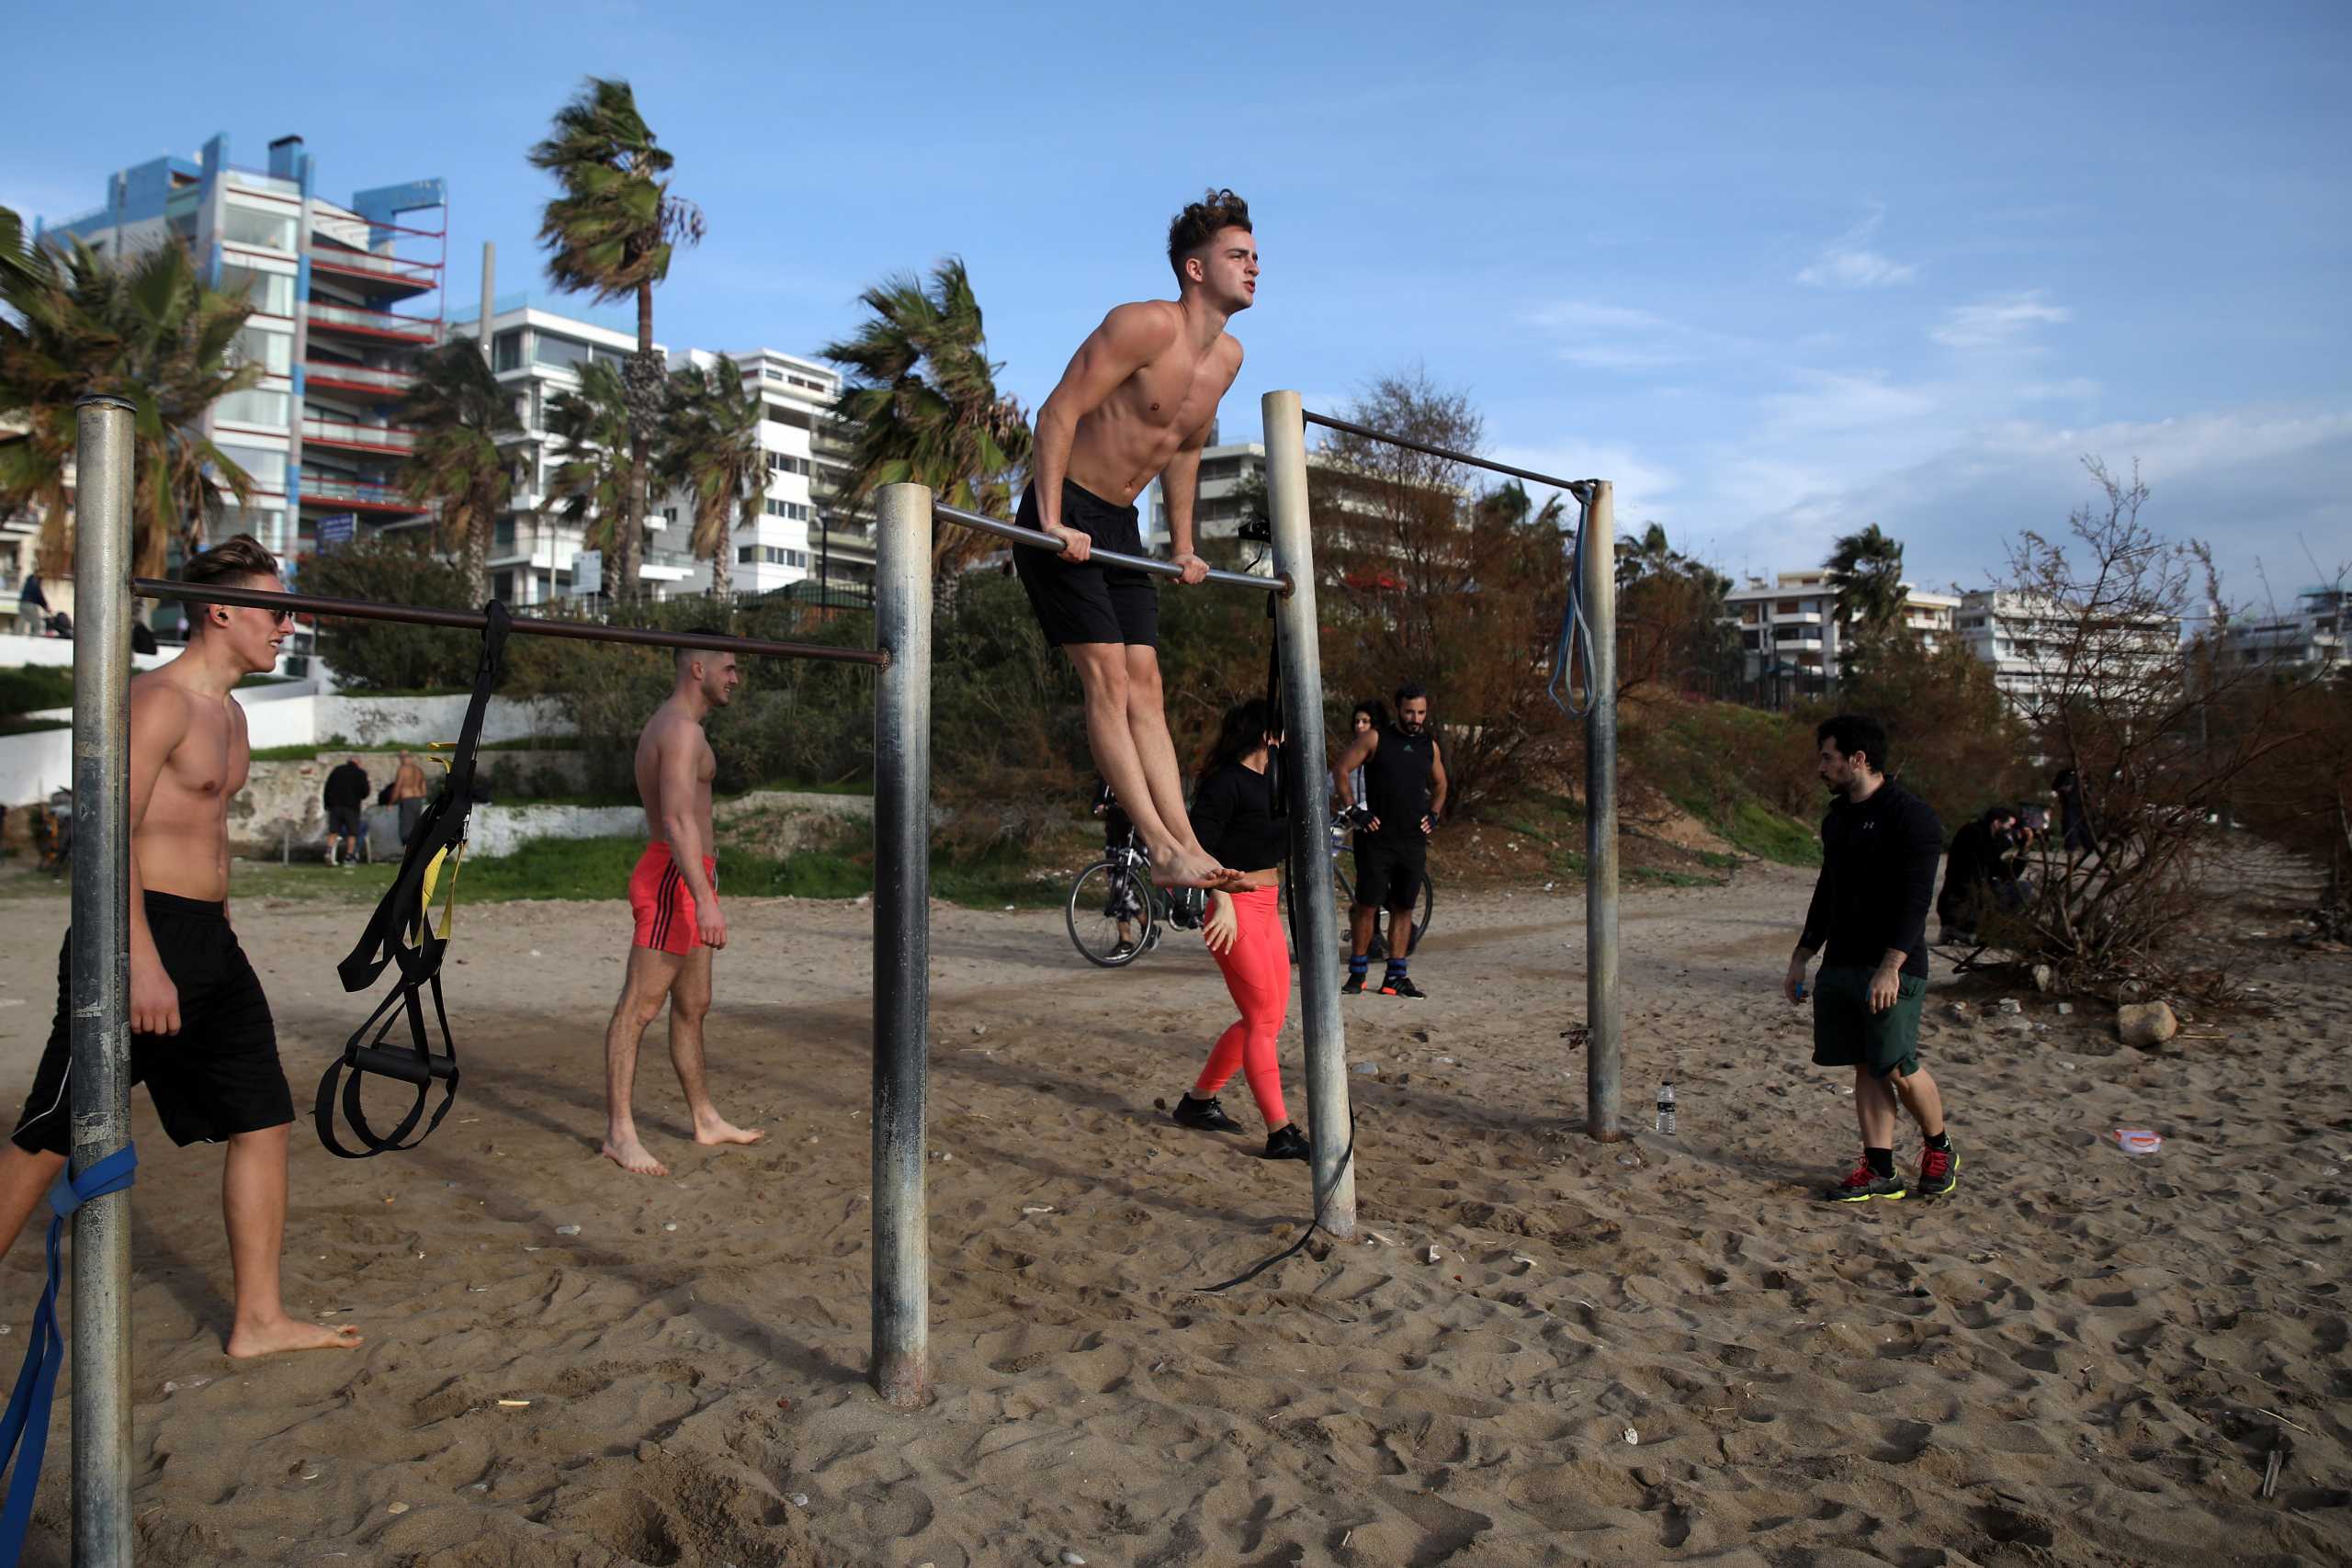 Lockdown: Το Reuters σχολιάζει τις εικόνες με τον κόσμο στις παραλίες (pics)